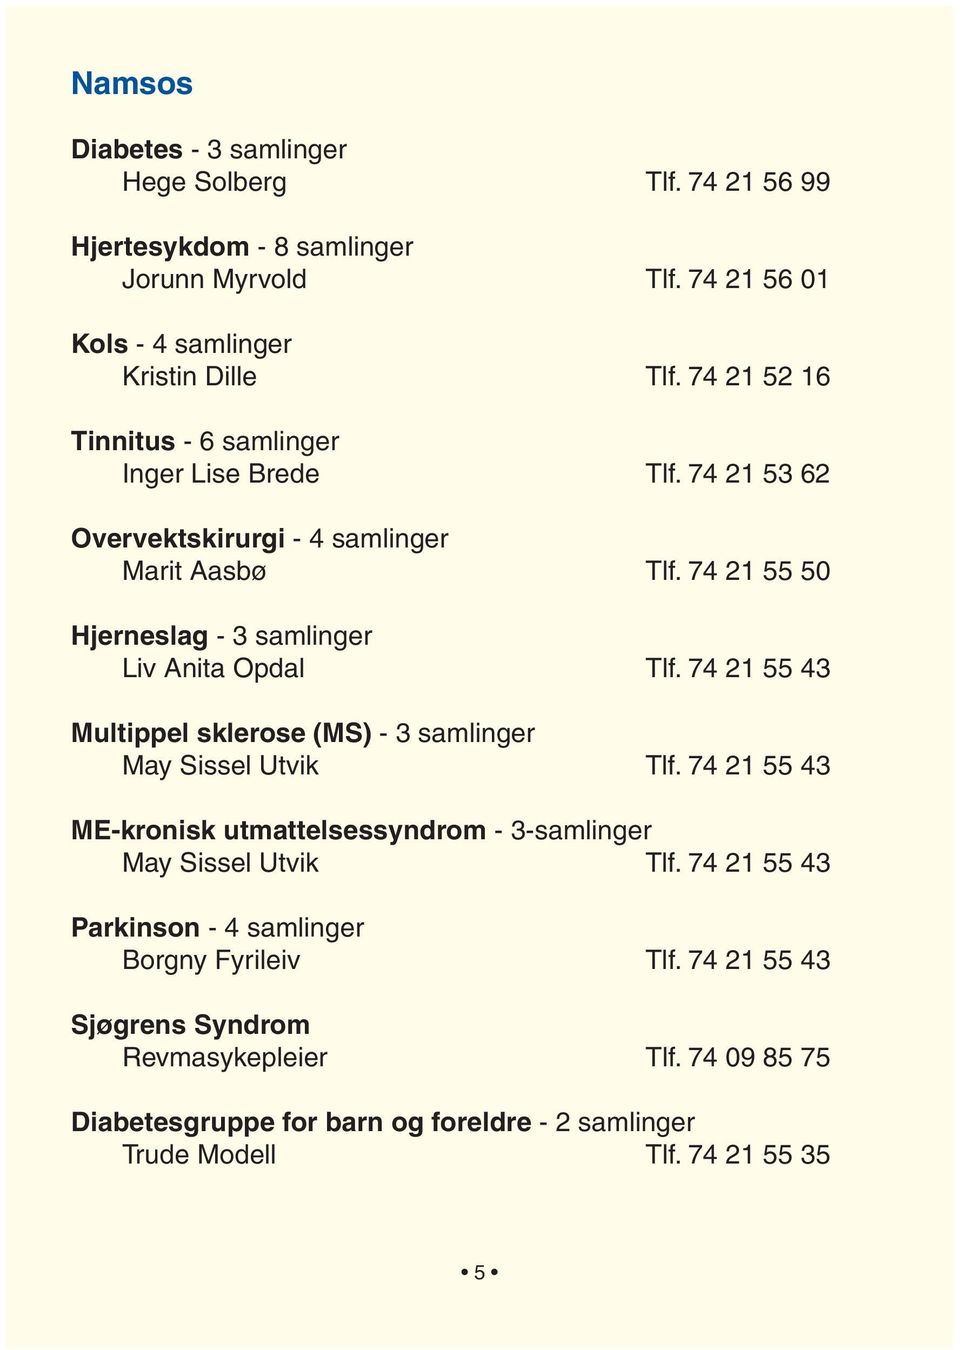 74 21 55 50 Hjerneslag - 3 samlinger Liv Anita Opdal Tlf. 74 21 55 43 Multippel sklerose (MS) - 3 samlinger May Sissel Utvik Tlf.